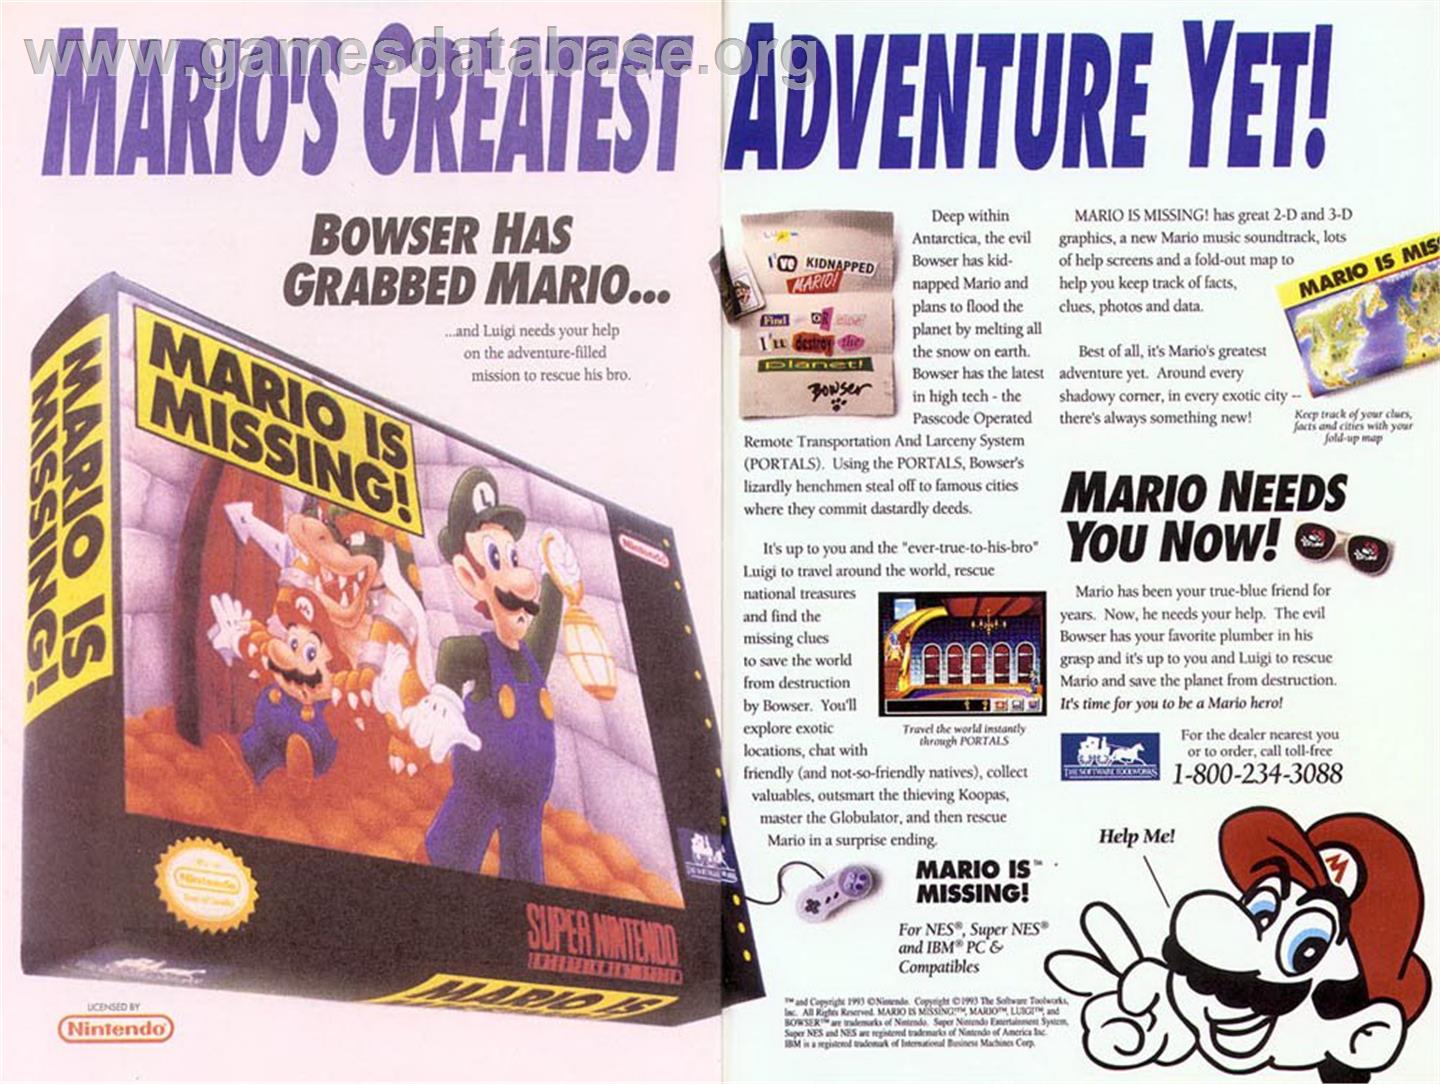 Mario is Missing! - Microsoft DOS - Artwork - Advert